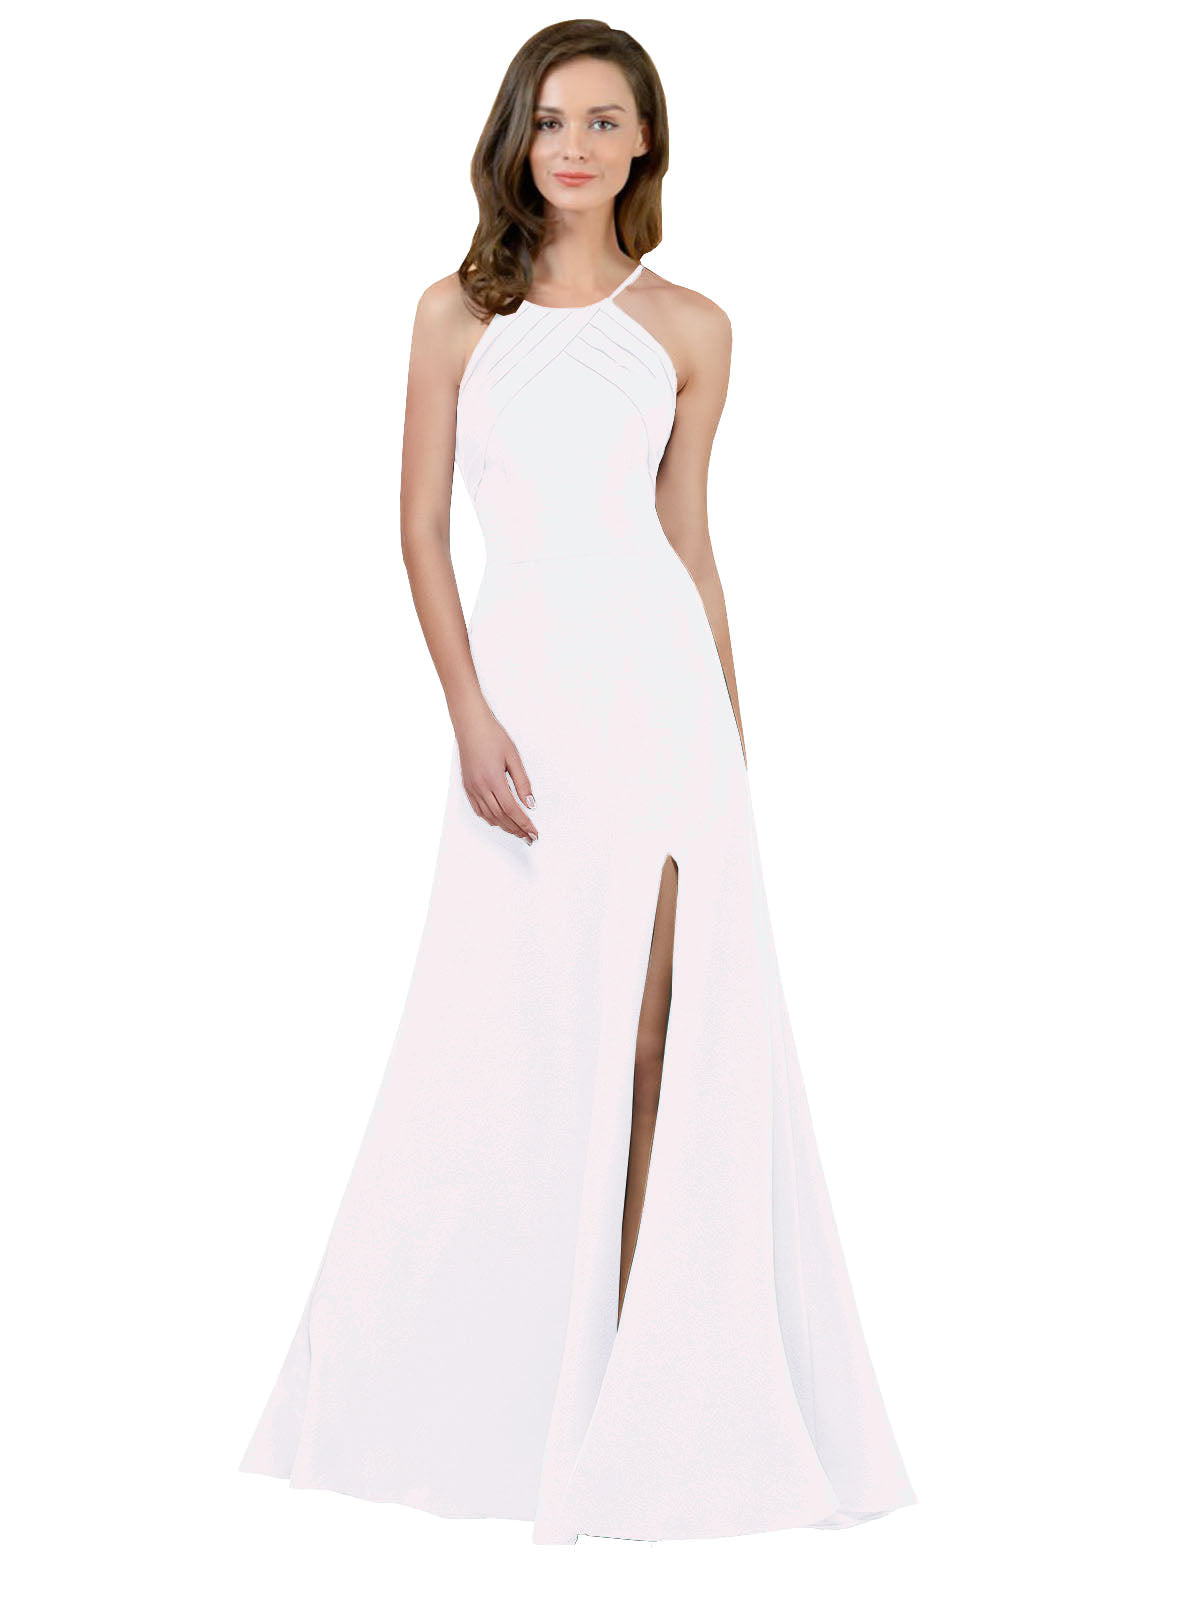 White A-Line High Neck Jewel Sleeveless Long Bridesmaid Dress Themi with Keyhole Back